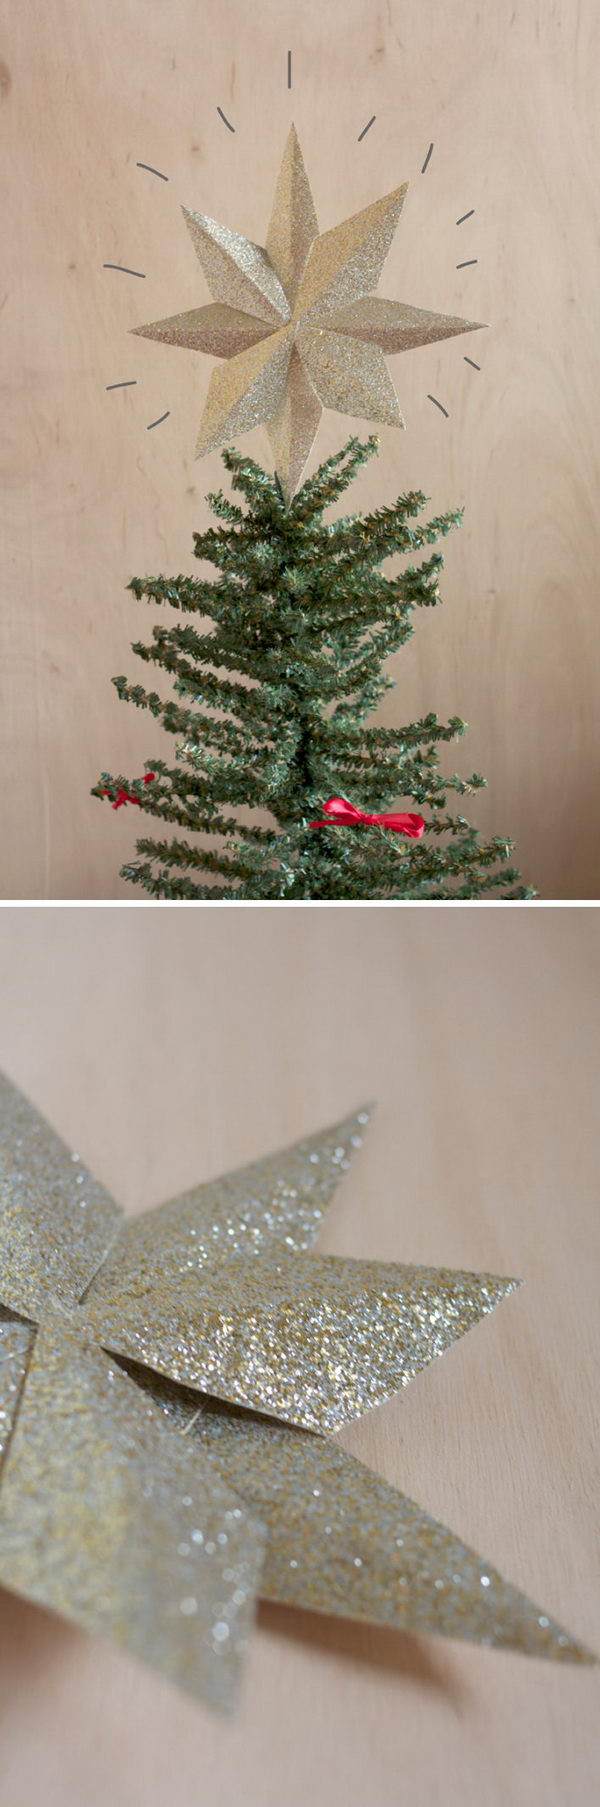 Christmas Tree Topper Ideas DIY
 Awesome DIY Christmas Tree Topper Ideas & Tutorials Hative